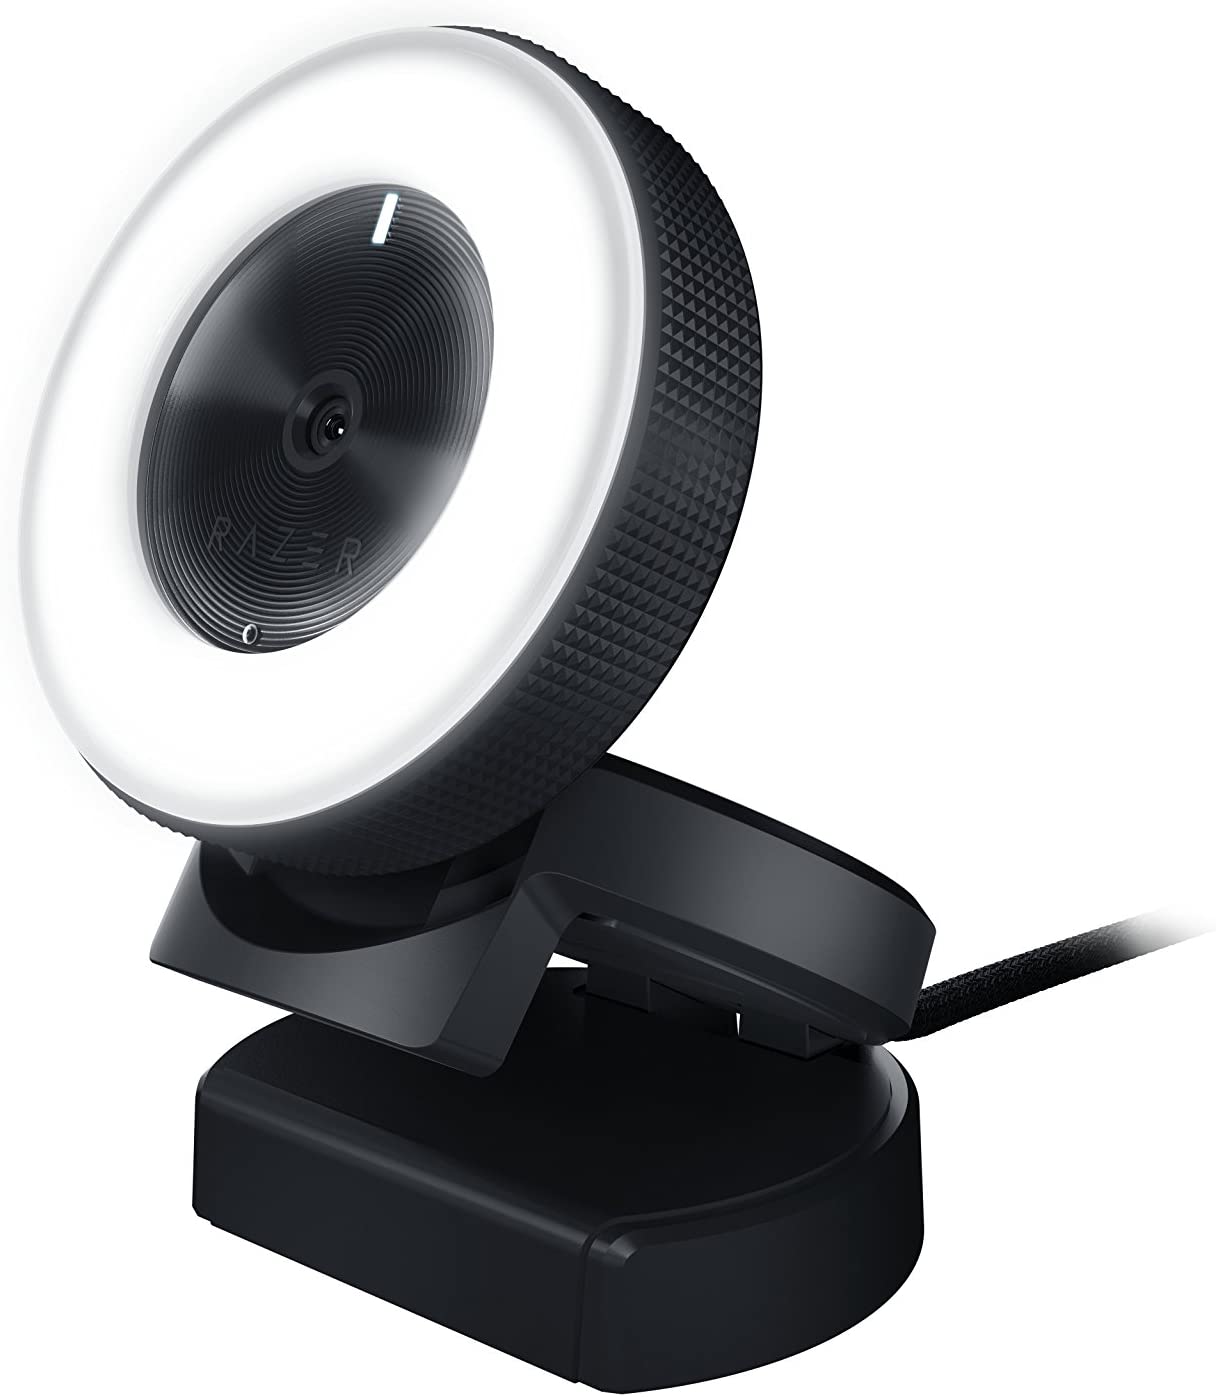 Razer Kiyo Full HD 1080p Streaming Webcam w/ Ring Light & Auto Focus $75